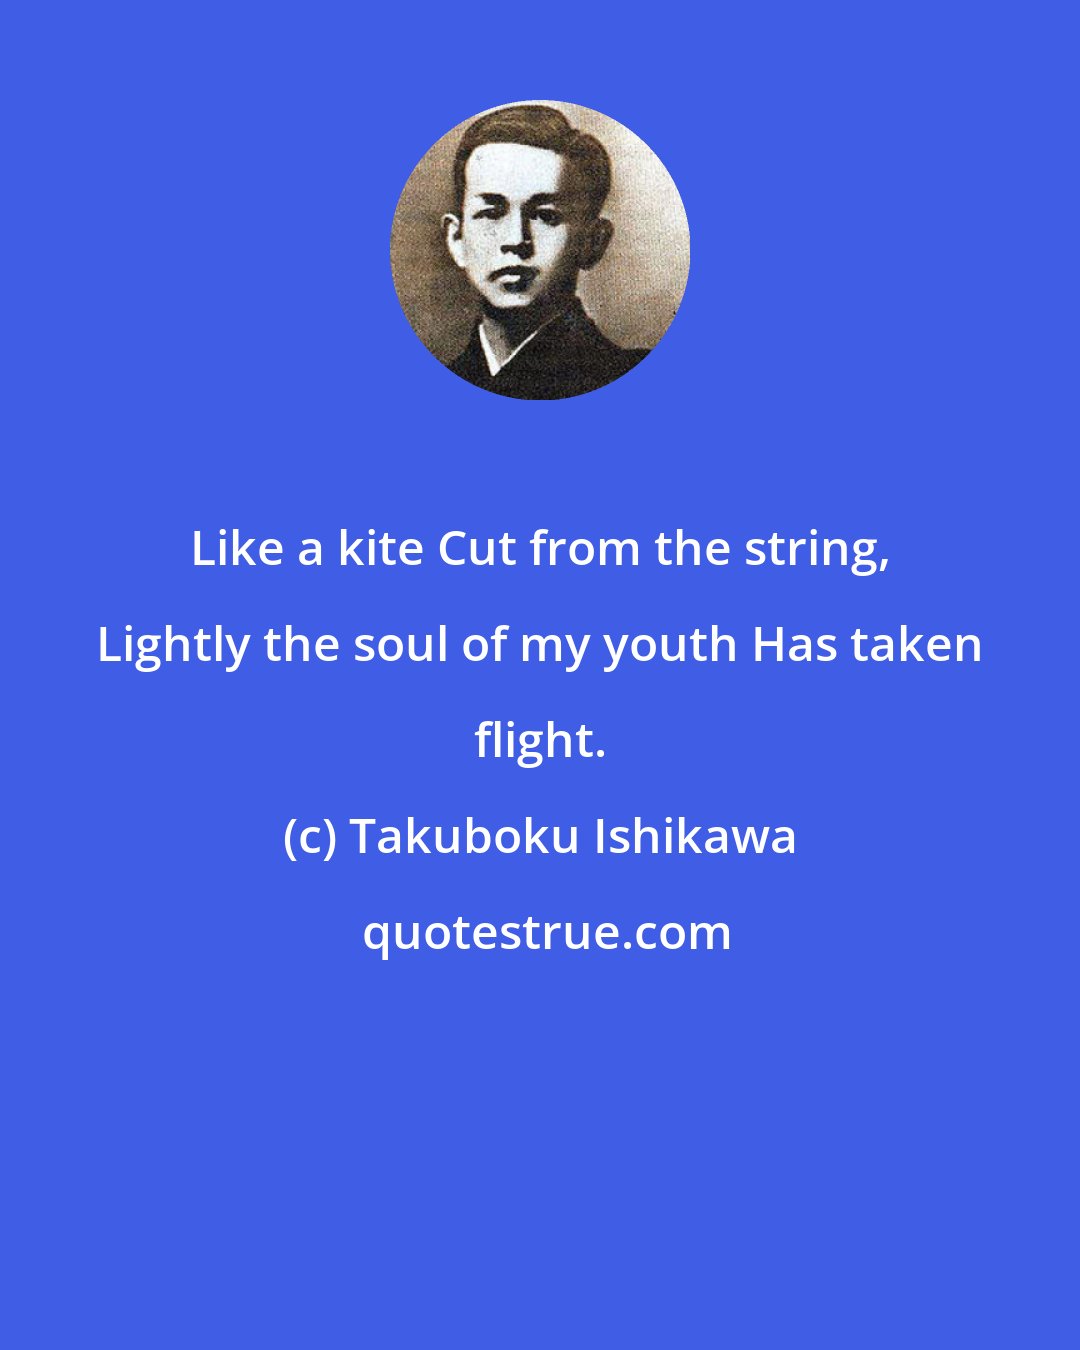 Takuboku Ishikawa: Like a kite Cut from the string, Lightly the soul of my youth Has taken flight.